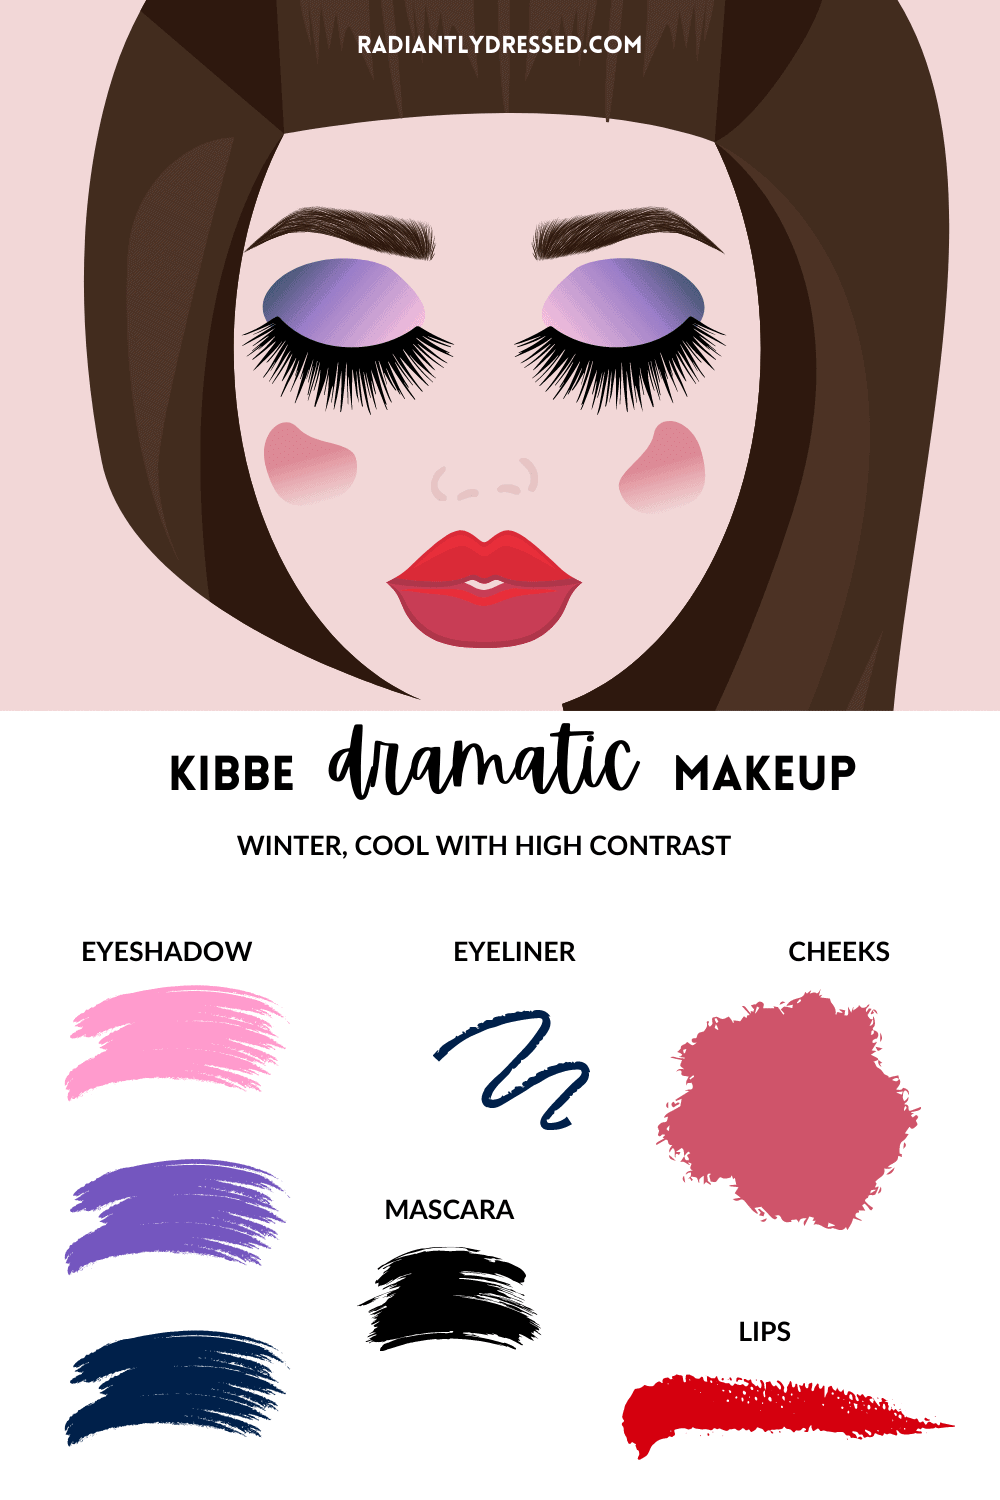 Kibbe dramatic makeup for winter color season